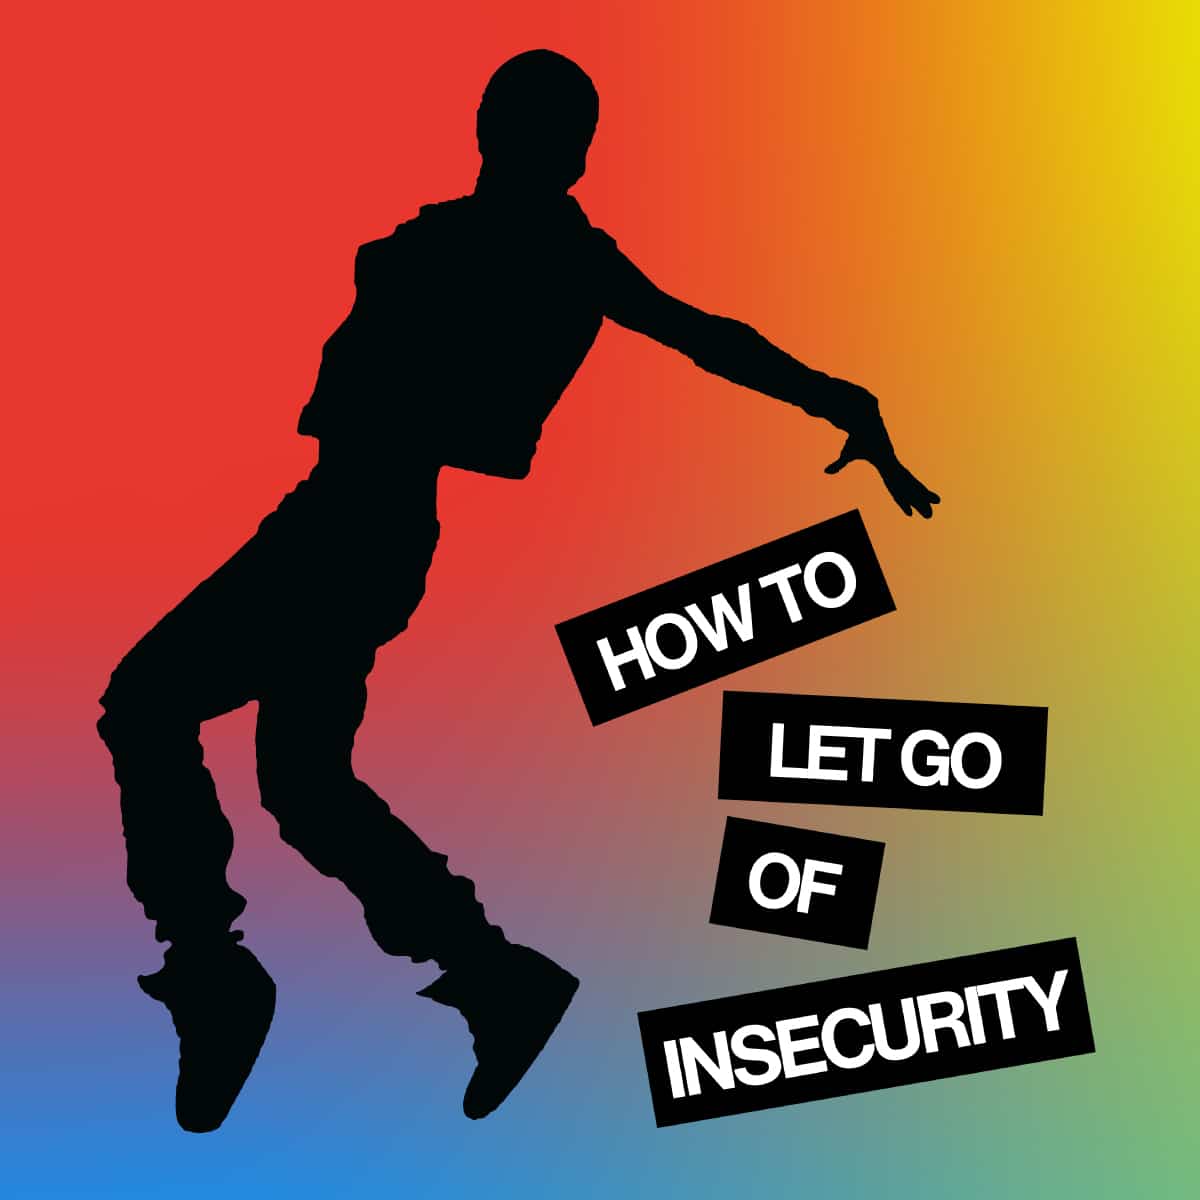 how-to-let-go-of-insecurity-kadampa-nyc-kadam-morten